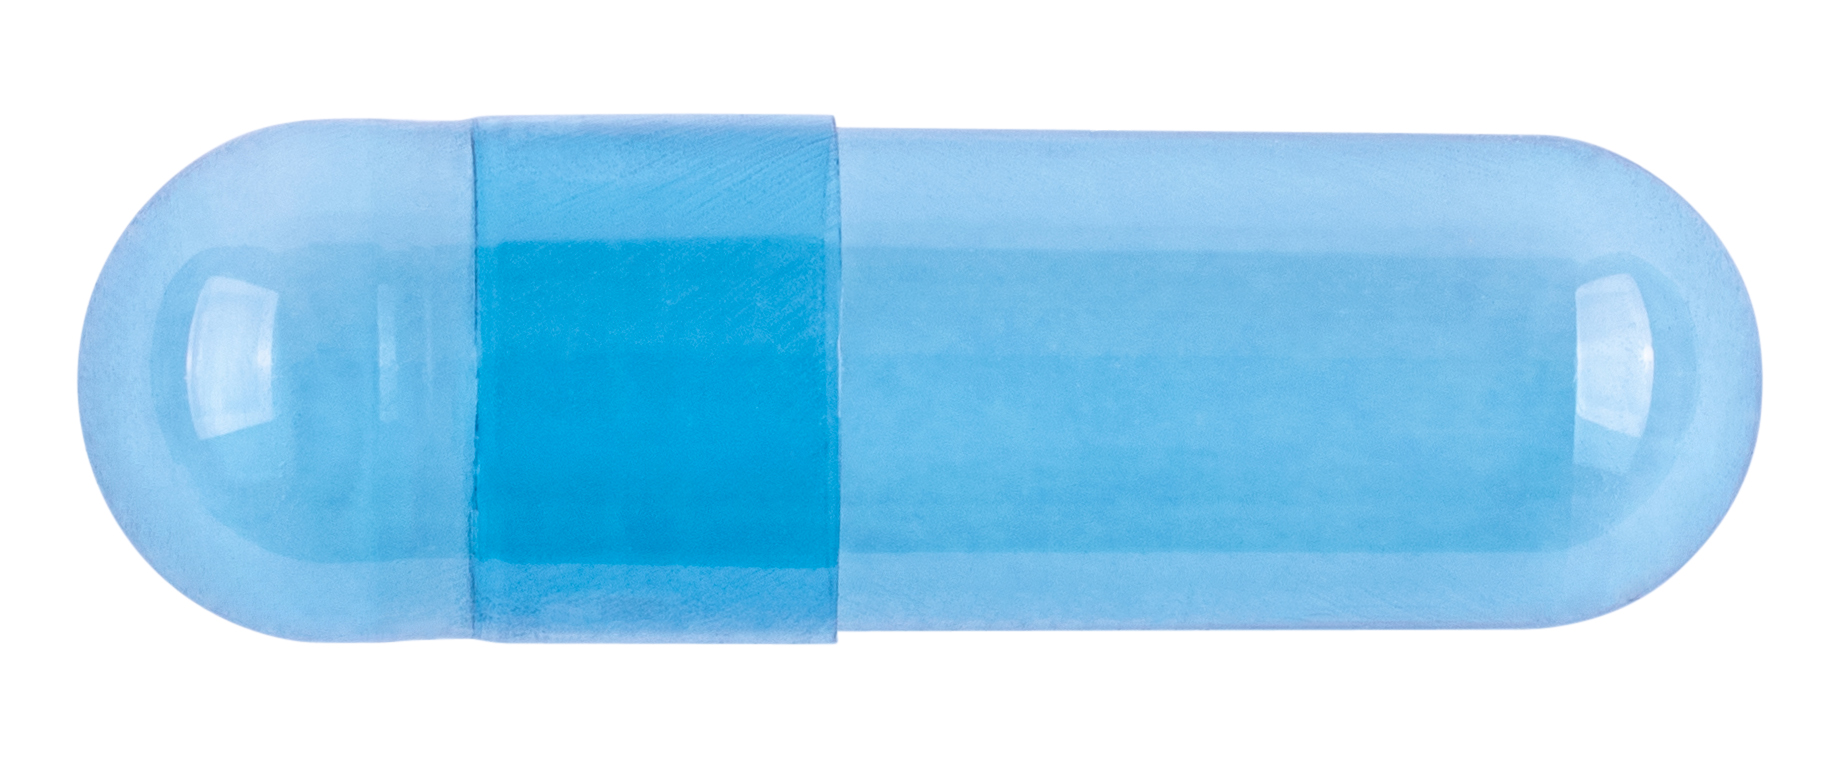 Capsules (Κάψουλες) 500mg N0 5000τμχ Μπλε Διαφανείς Φυτικές / Blue Transparent Vegetarian